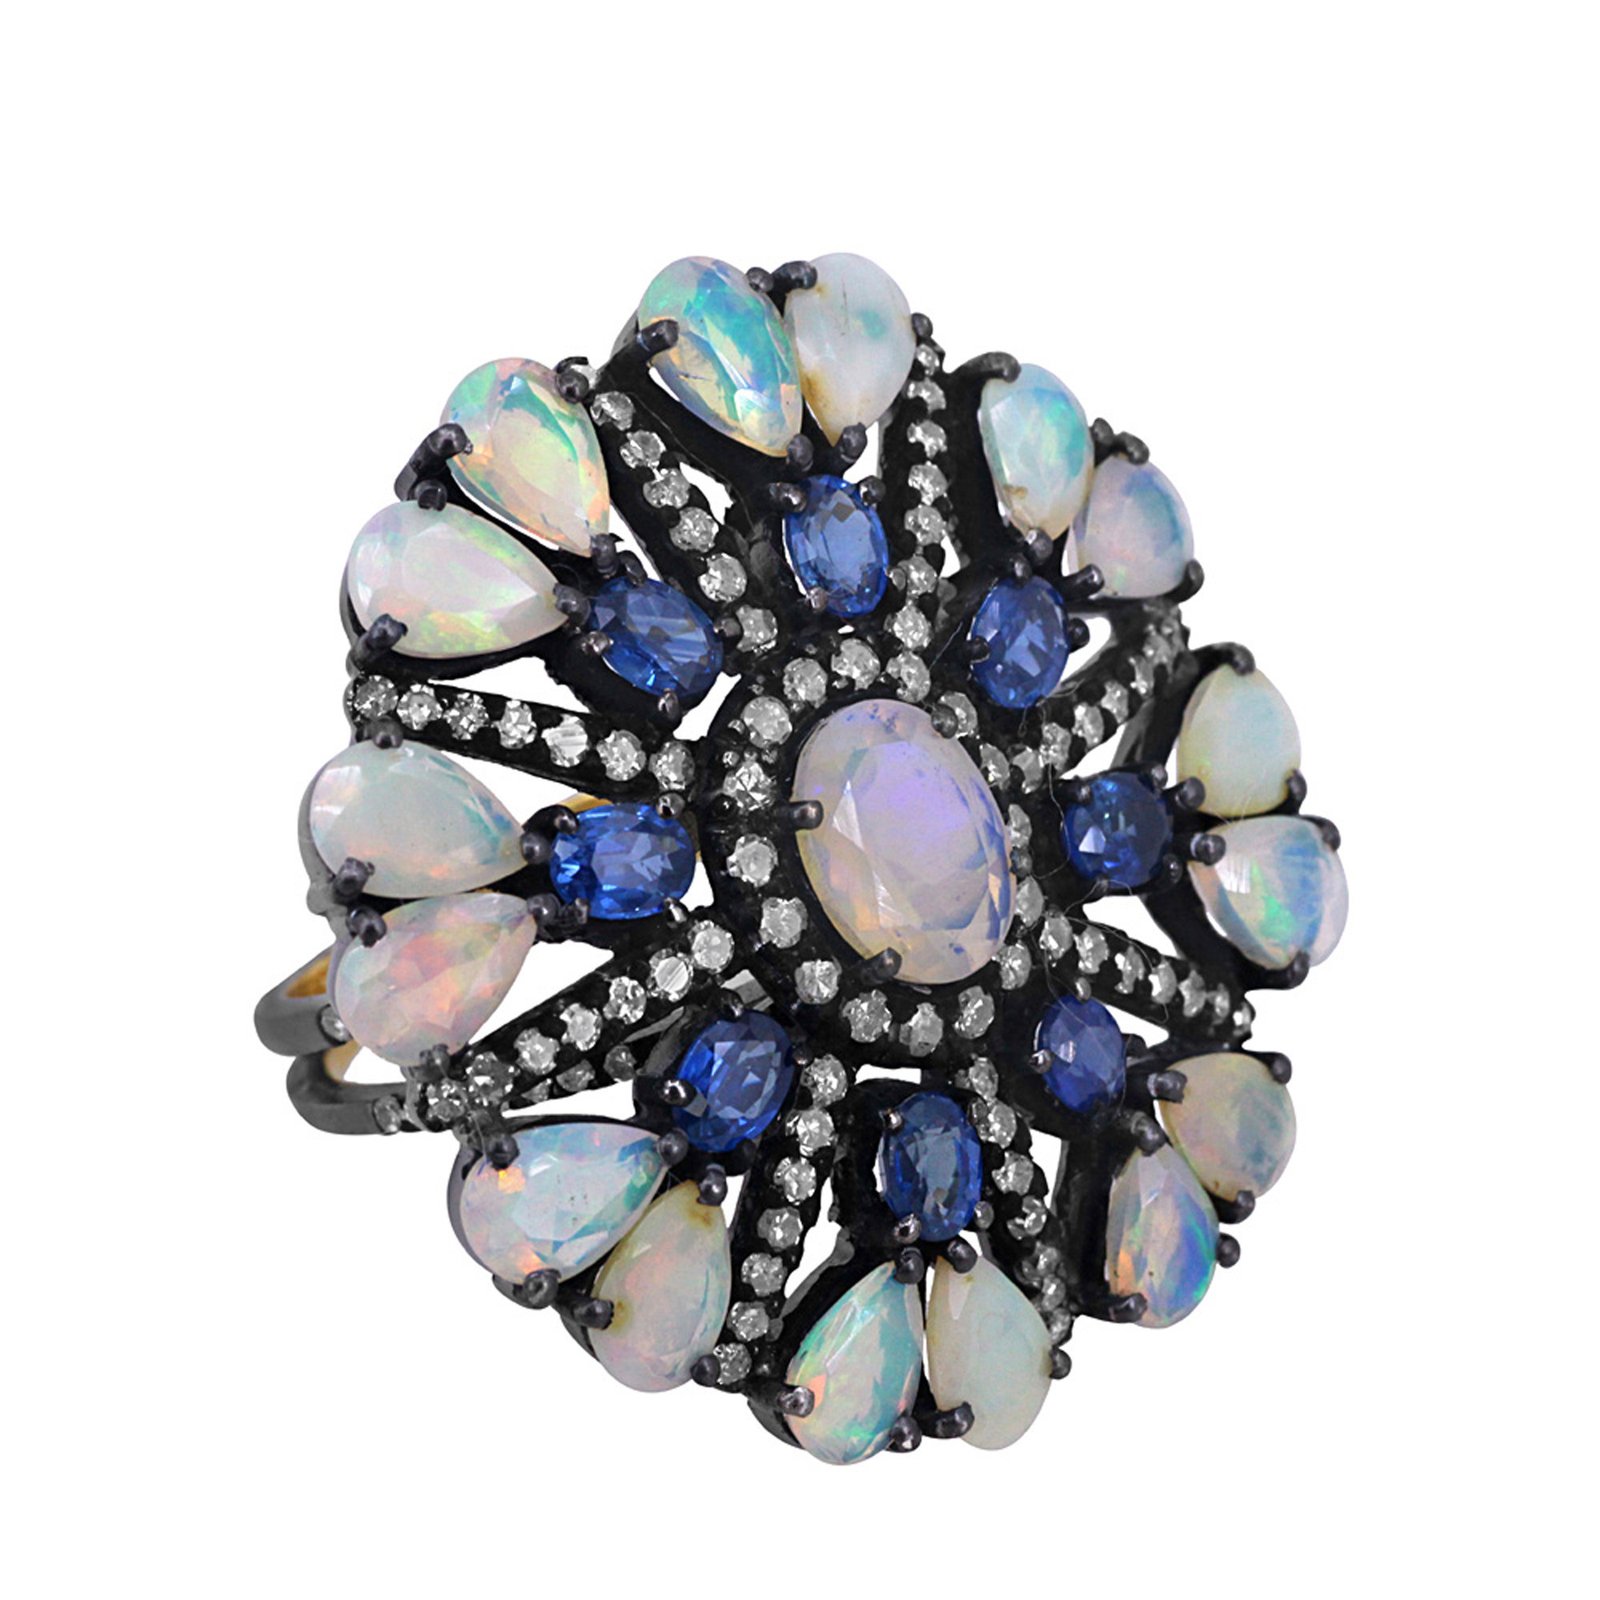 Blue sapphire & opal gemstone ring, 925 silver & 14k gold diamond jewelry